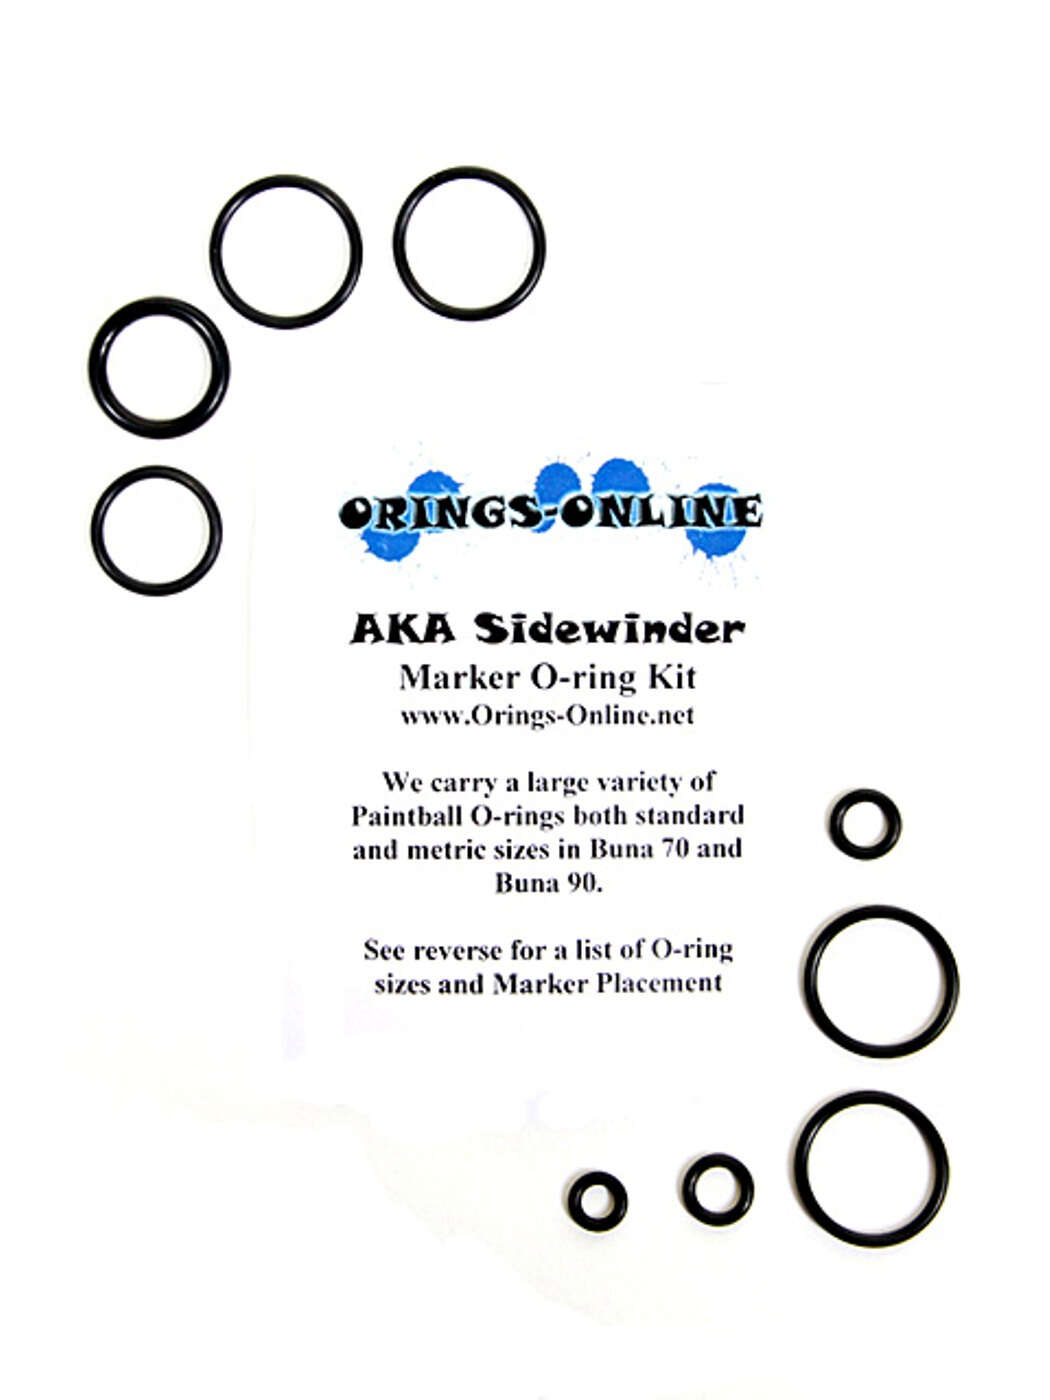 AKA Sidewinder Marker O-ring Kit